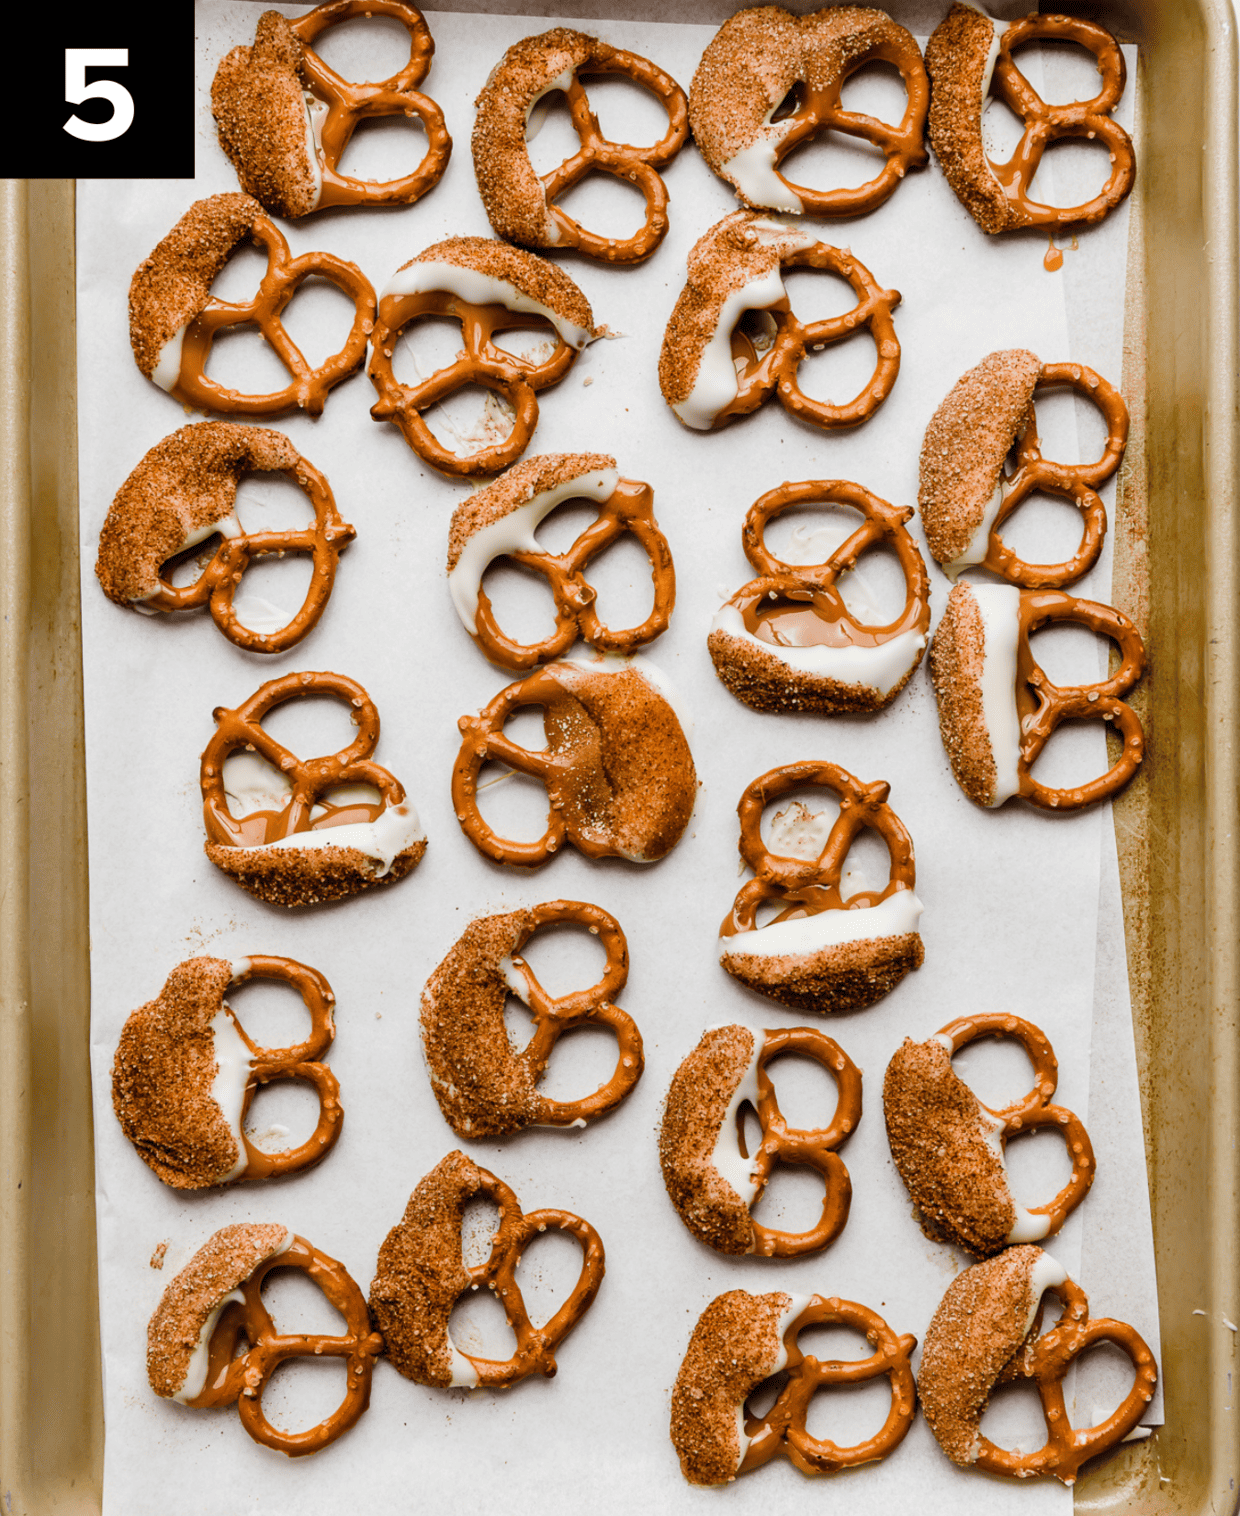 Caramel coated snickerdoodle pretzels on a white parchment paper.